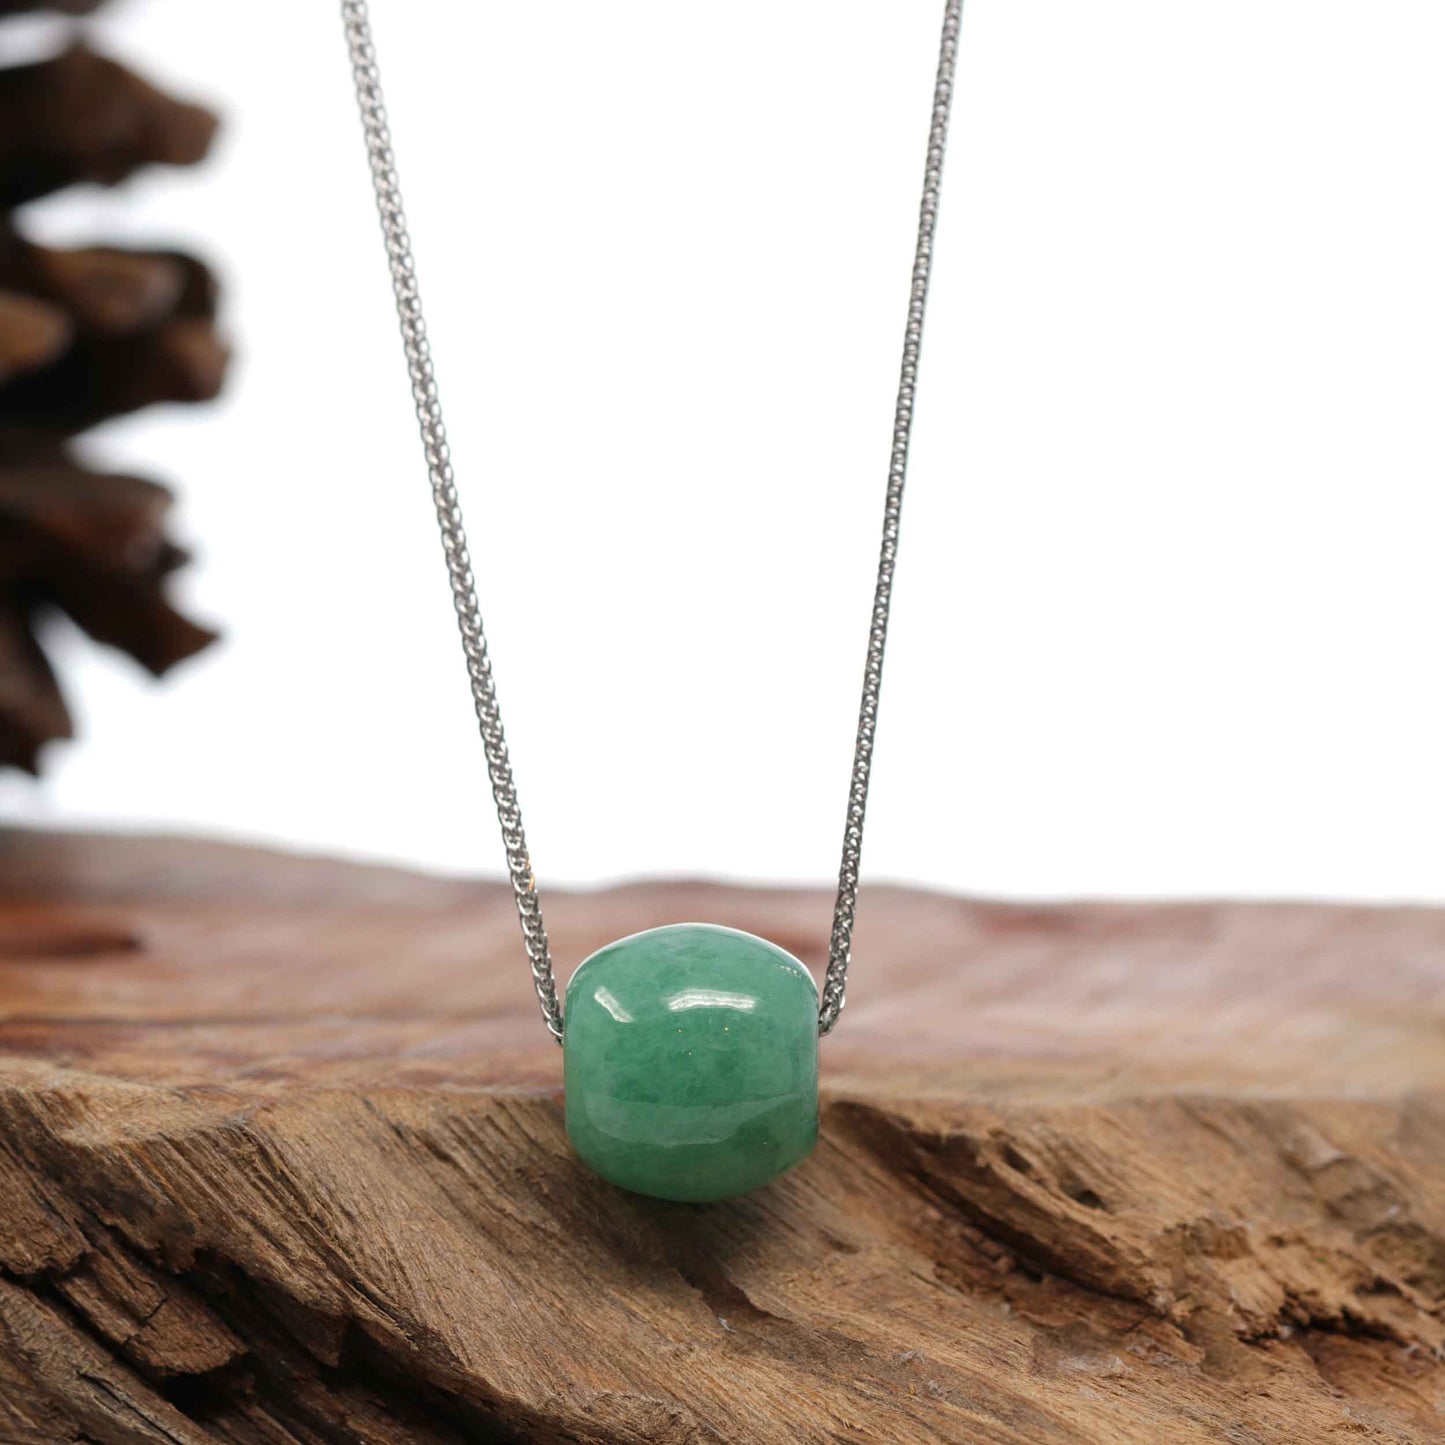 RealJade® Co. "Good Luck Button" Necklace Forest Green Jade Lucky KouKou Pendant Necklace